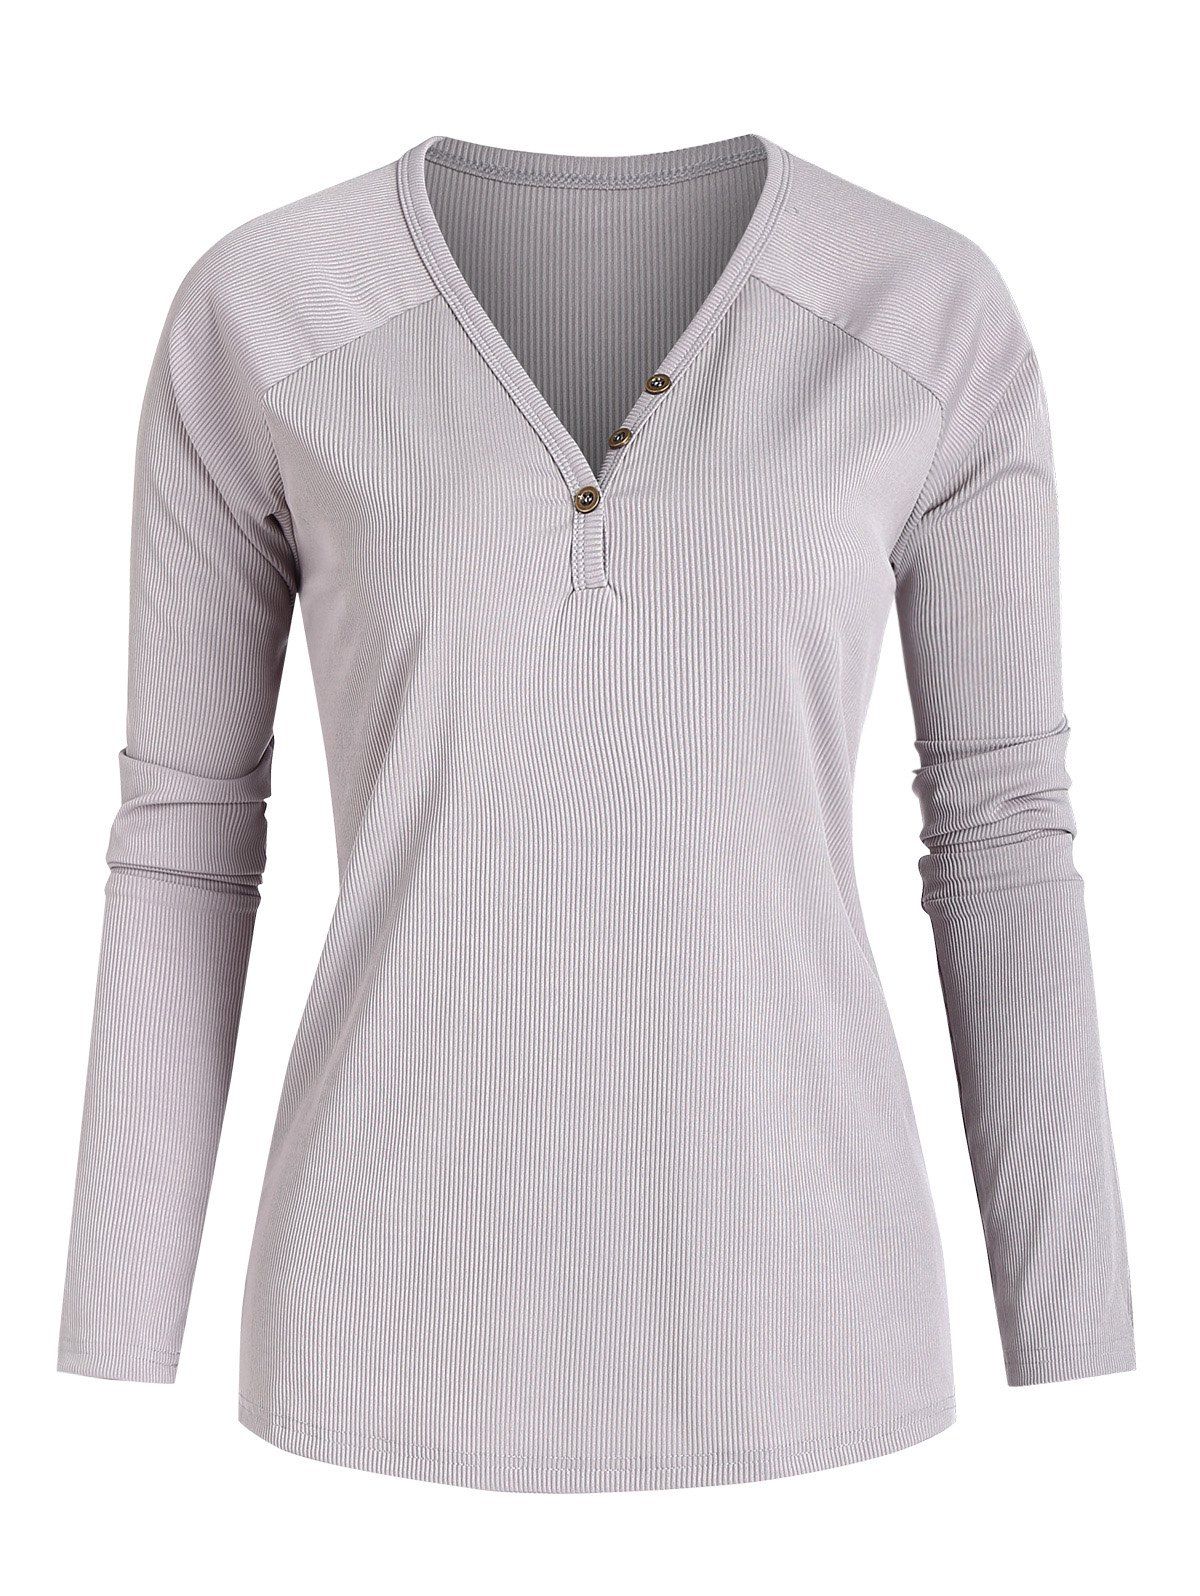 Ribbed Mock Button Raglan Sleeve T Shirt - LIGHT GRAY XL